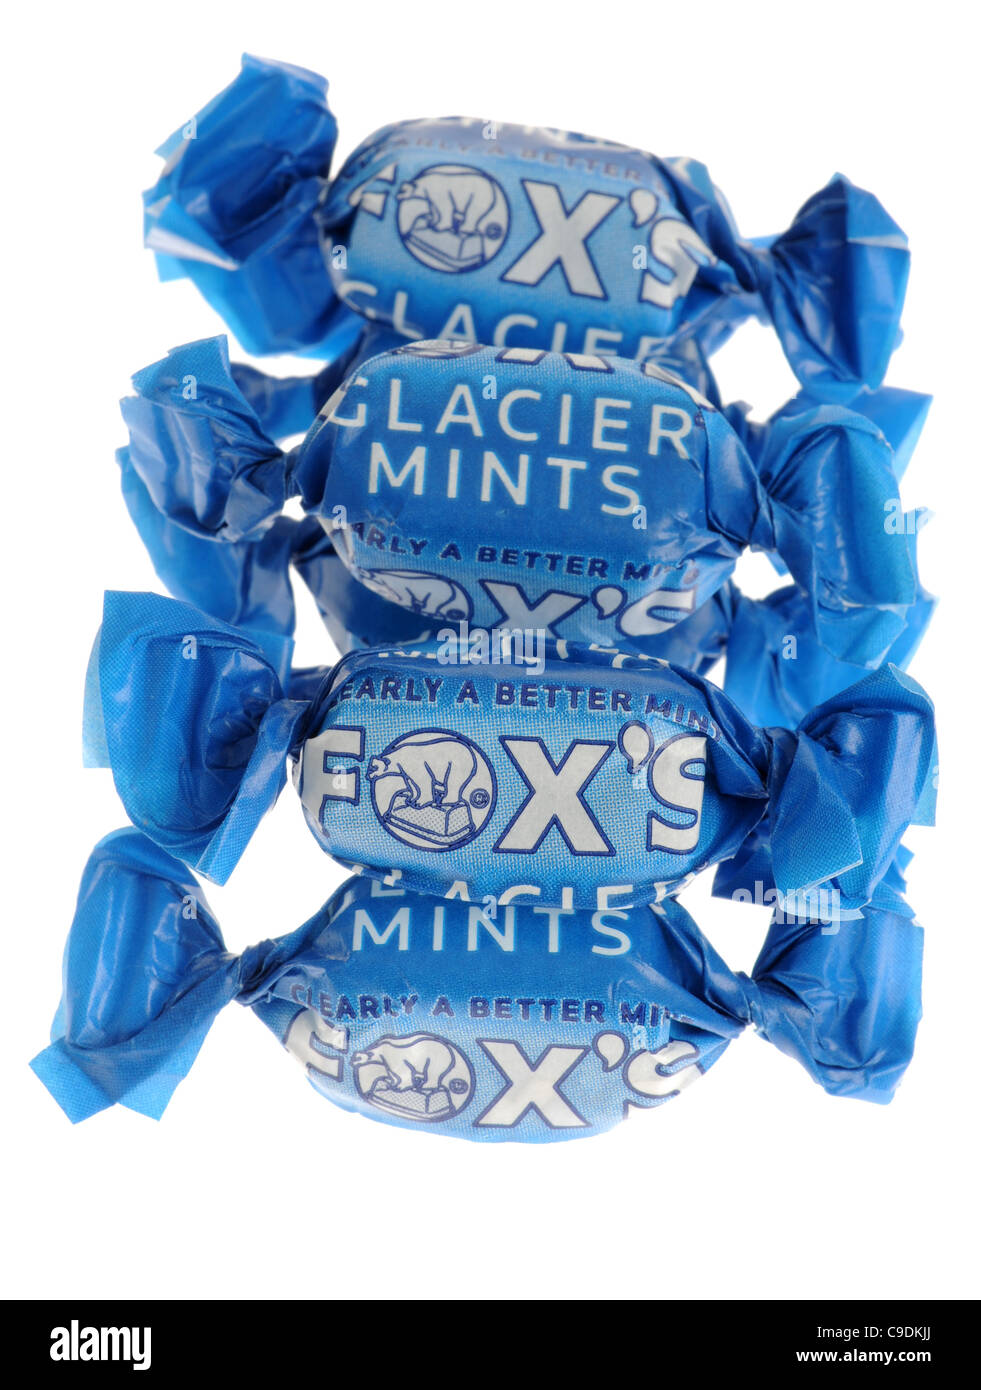 Fox's Glacier Mints Stock Photo